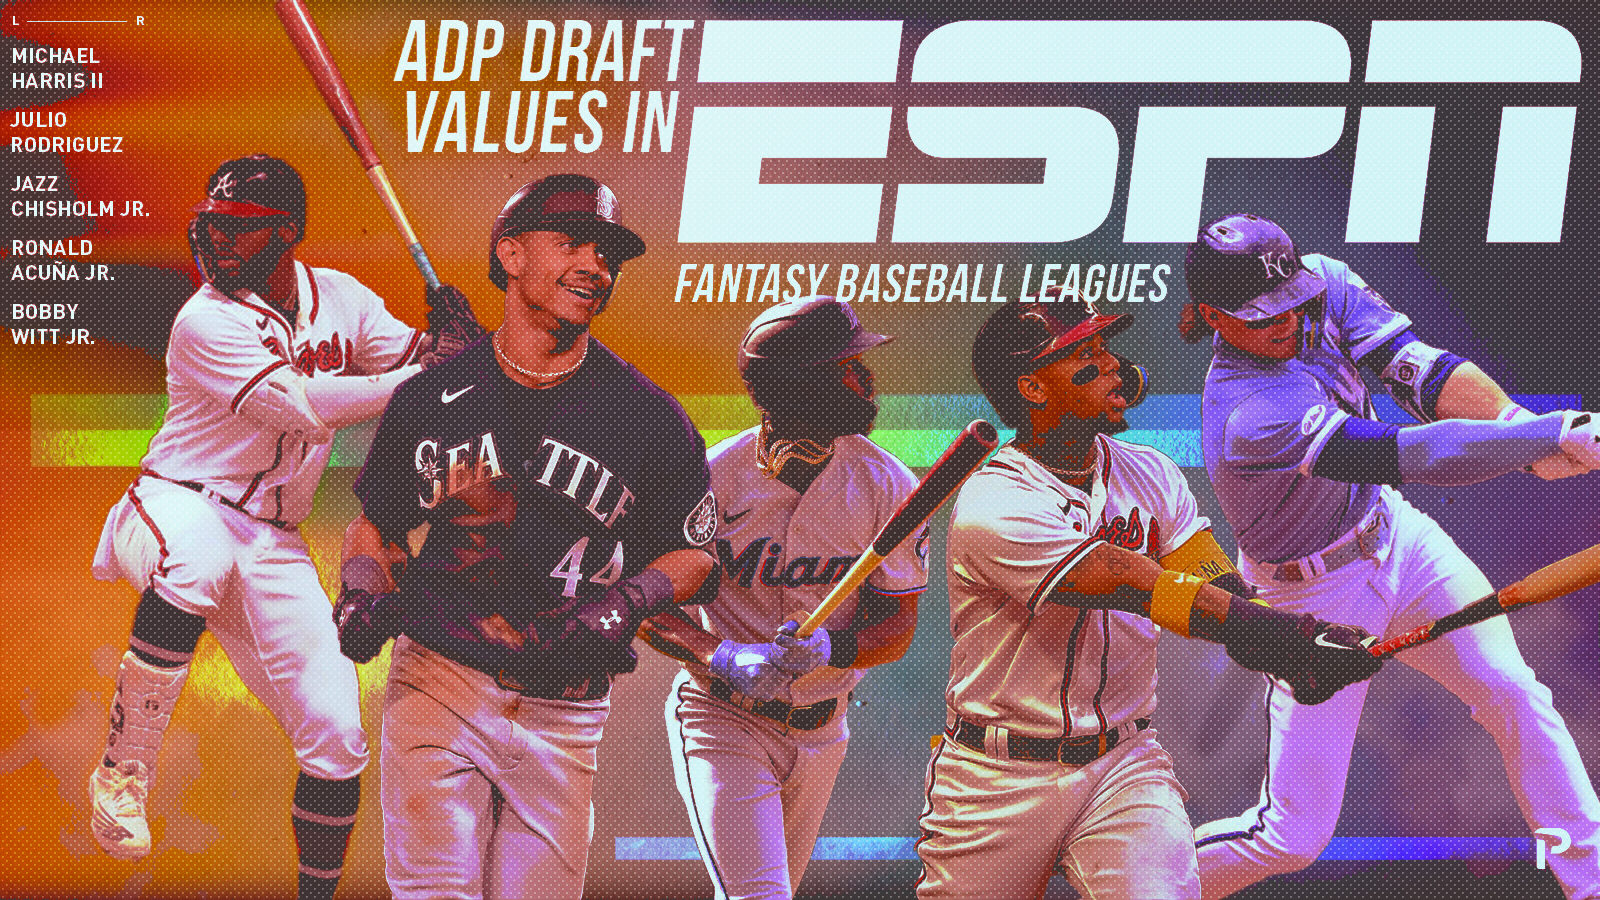 ADP Draft Values for ESPN Fantasy Baseball Leagues